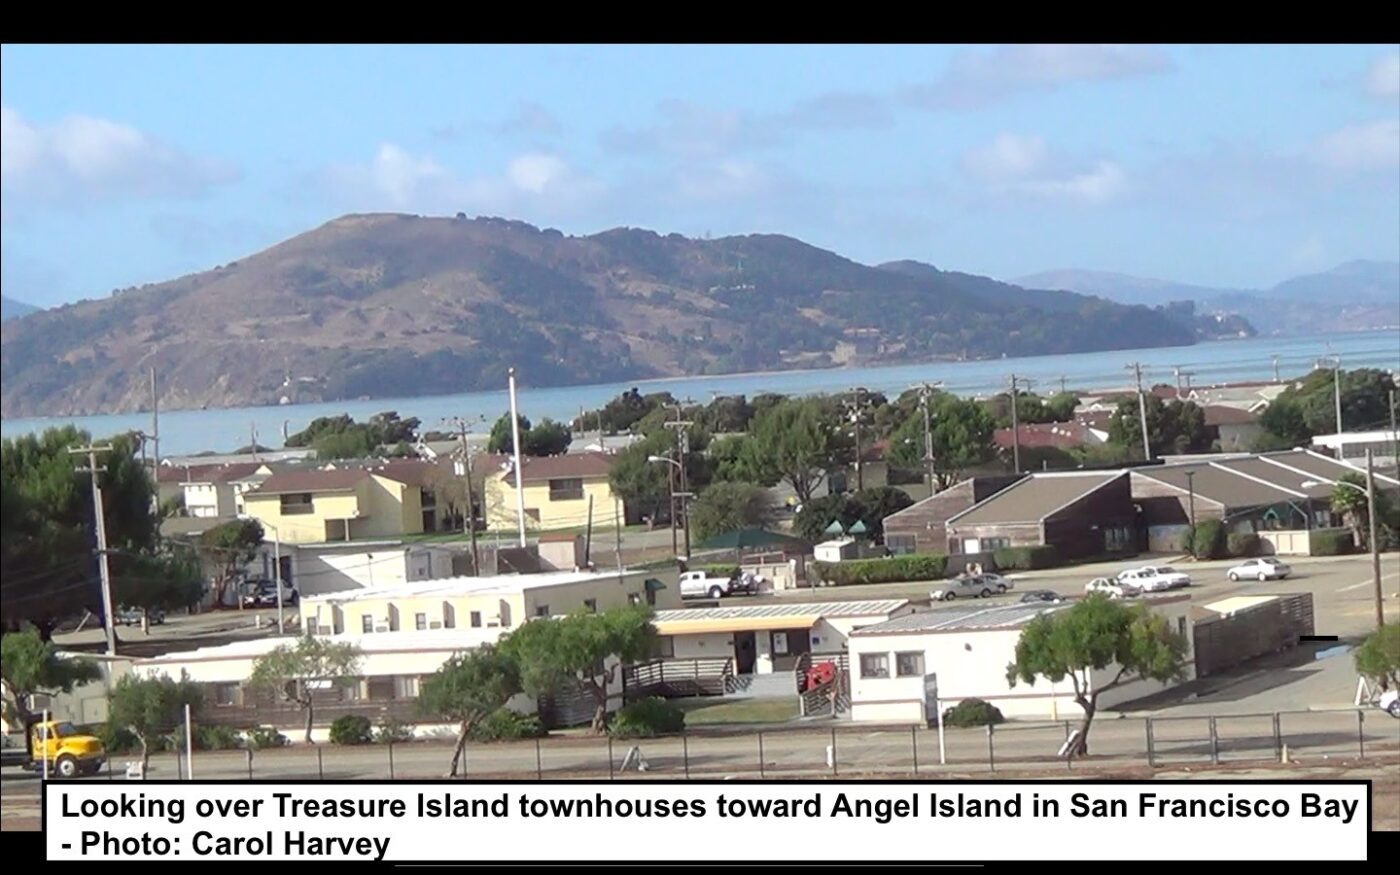 treasure-island-community-looking-toward-angel-island-1400x875, The poisoned people of Treasure Island need gutsy lawyers, Featured Local News & Views 